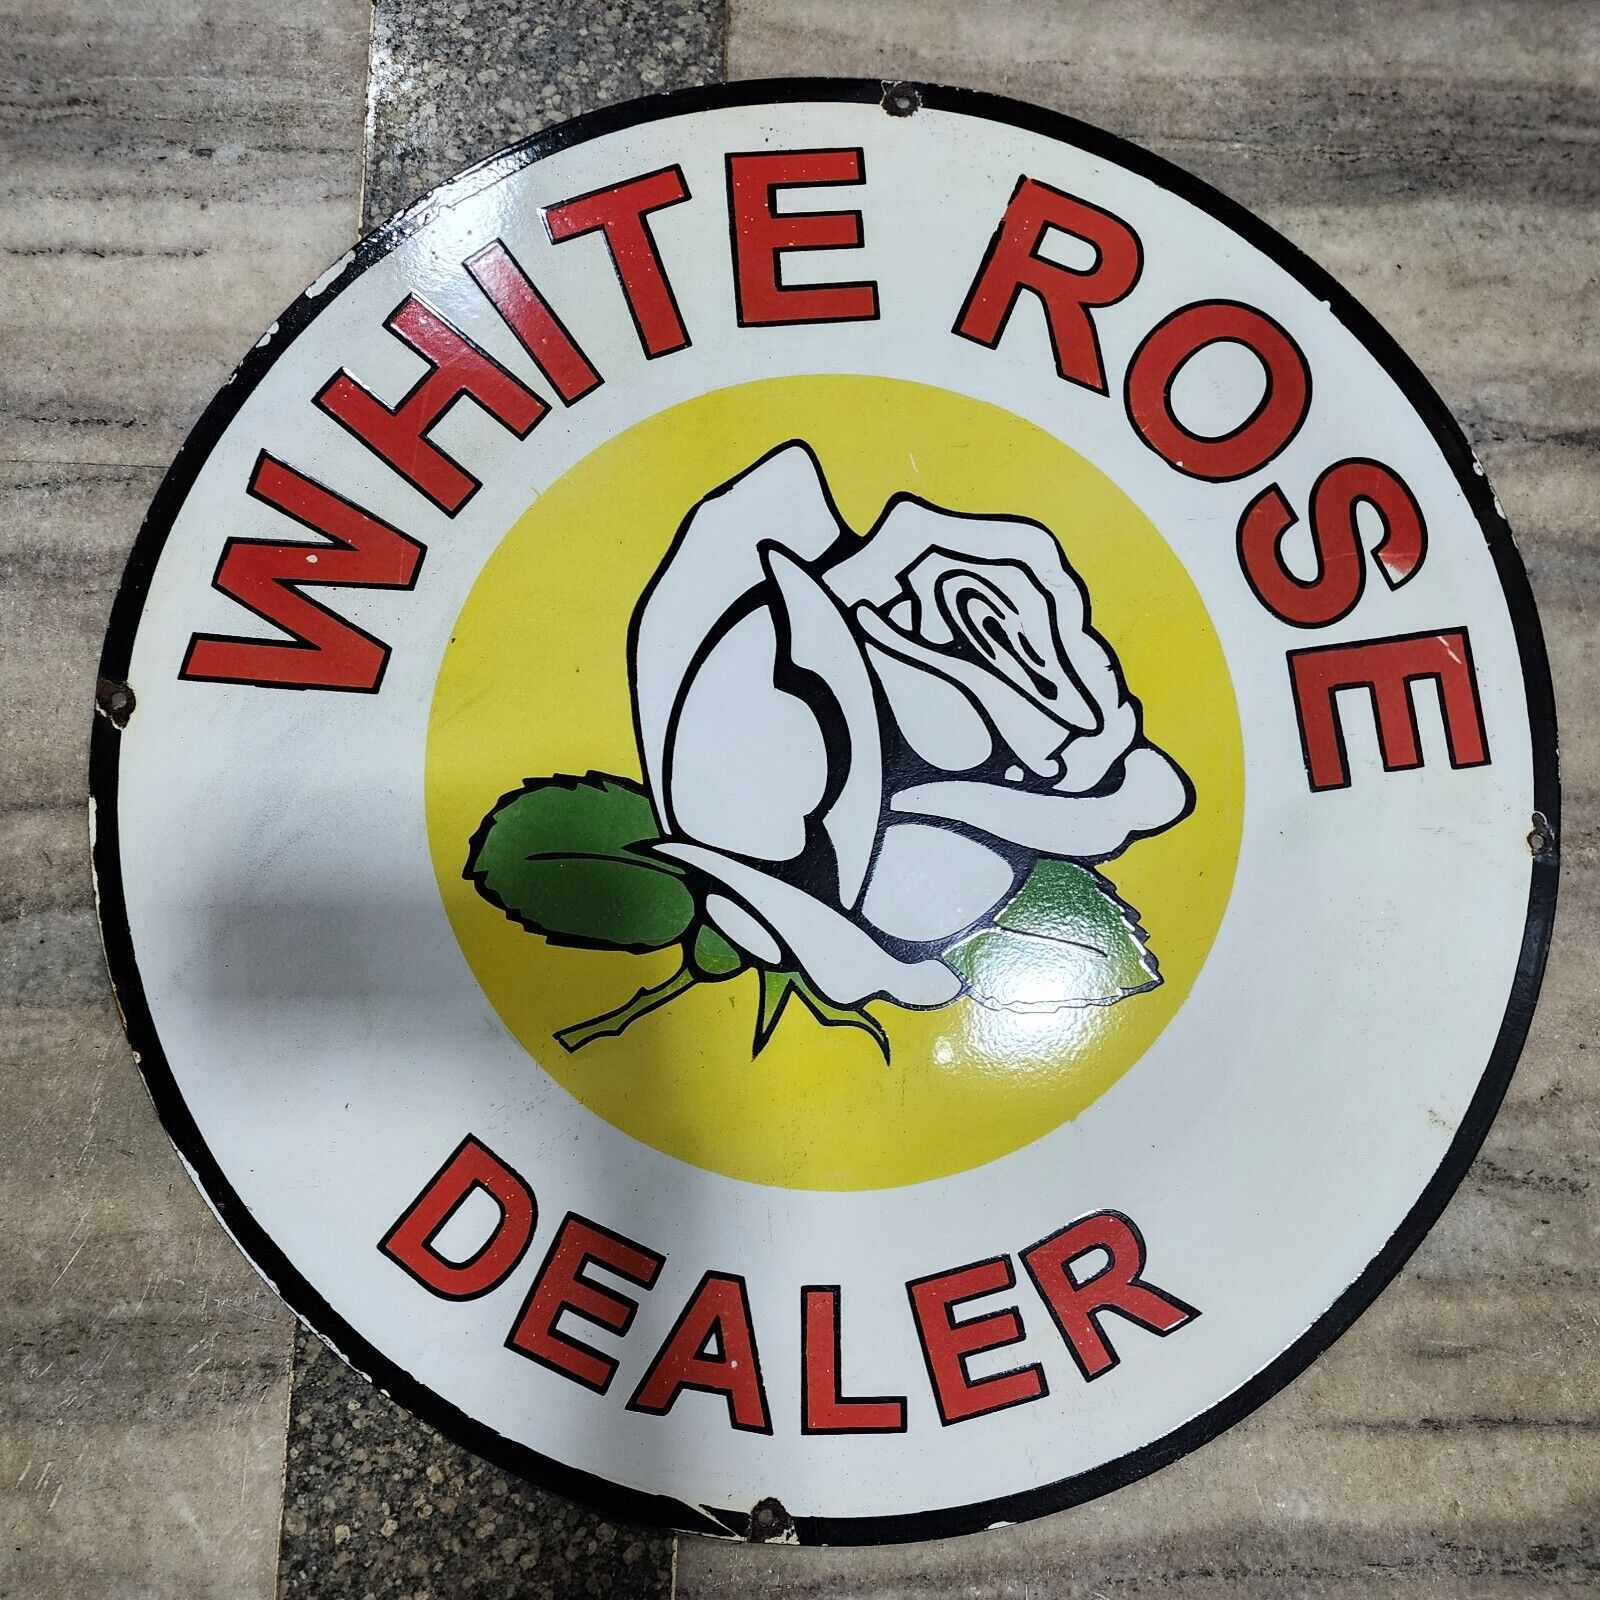 WHITE ROSE DEALER PORCELAIN ENAMEL SIGN 30 INCHES ROUND